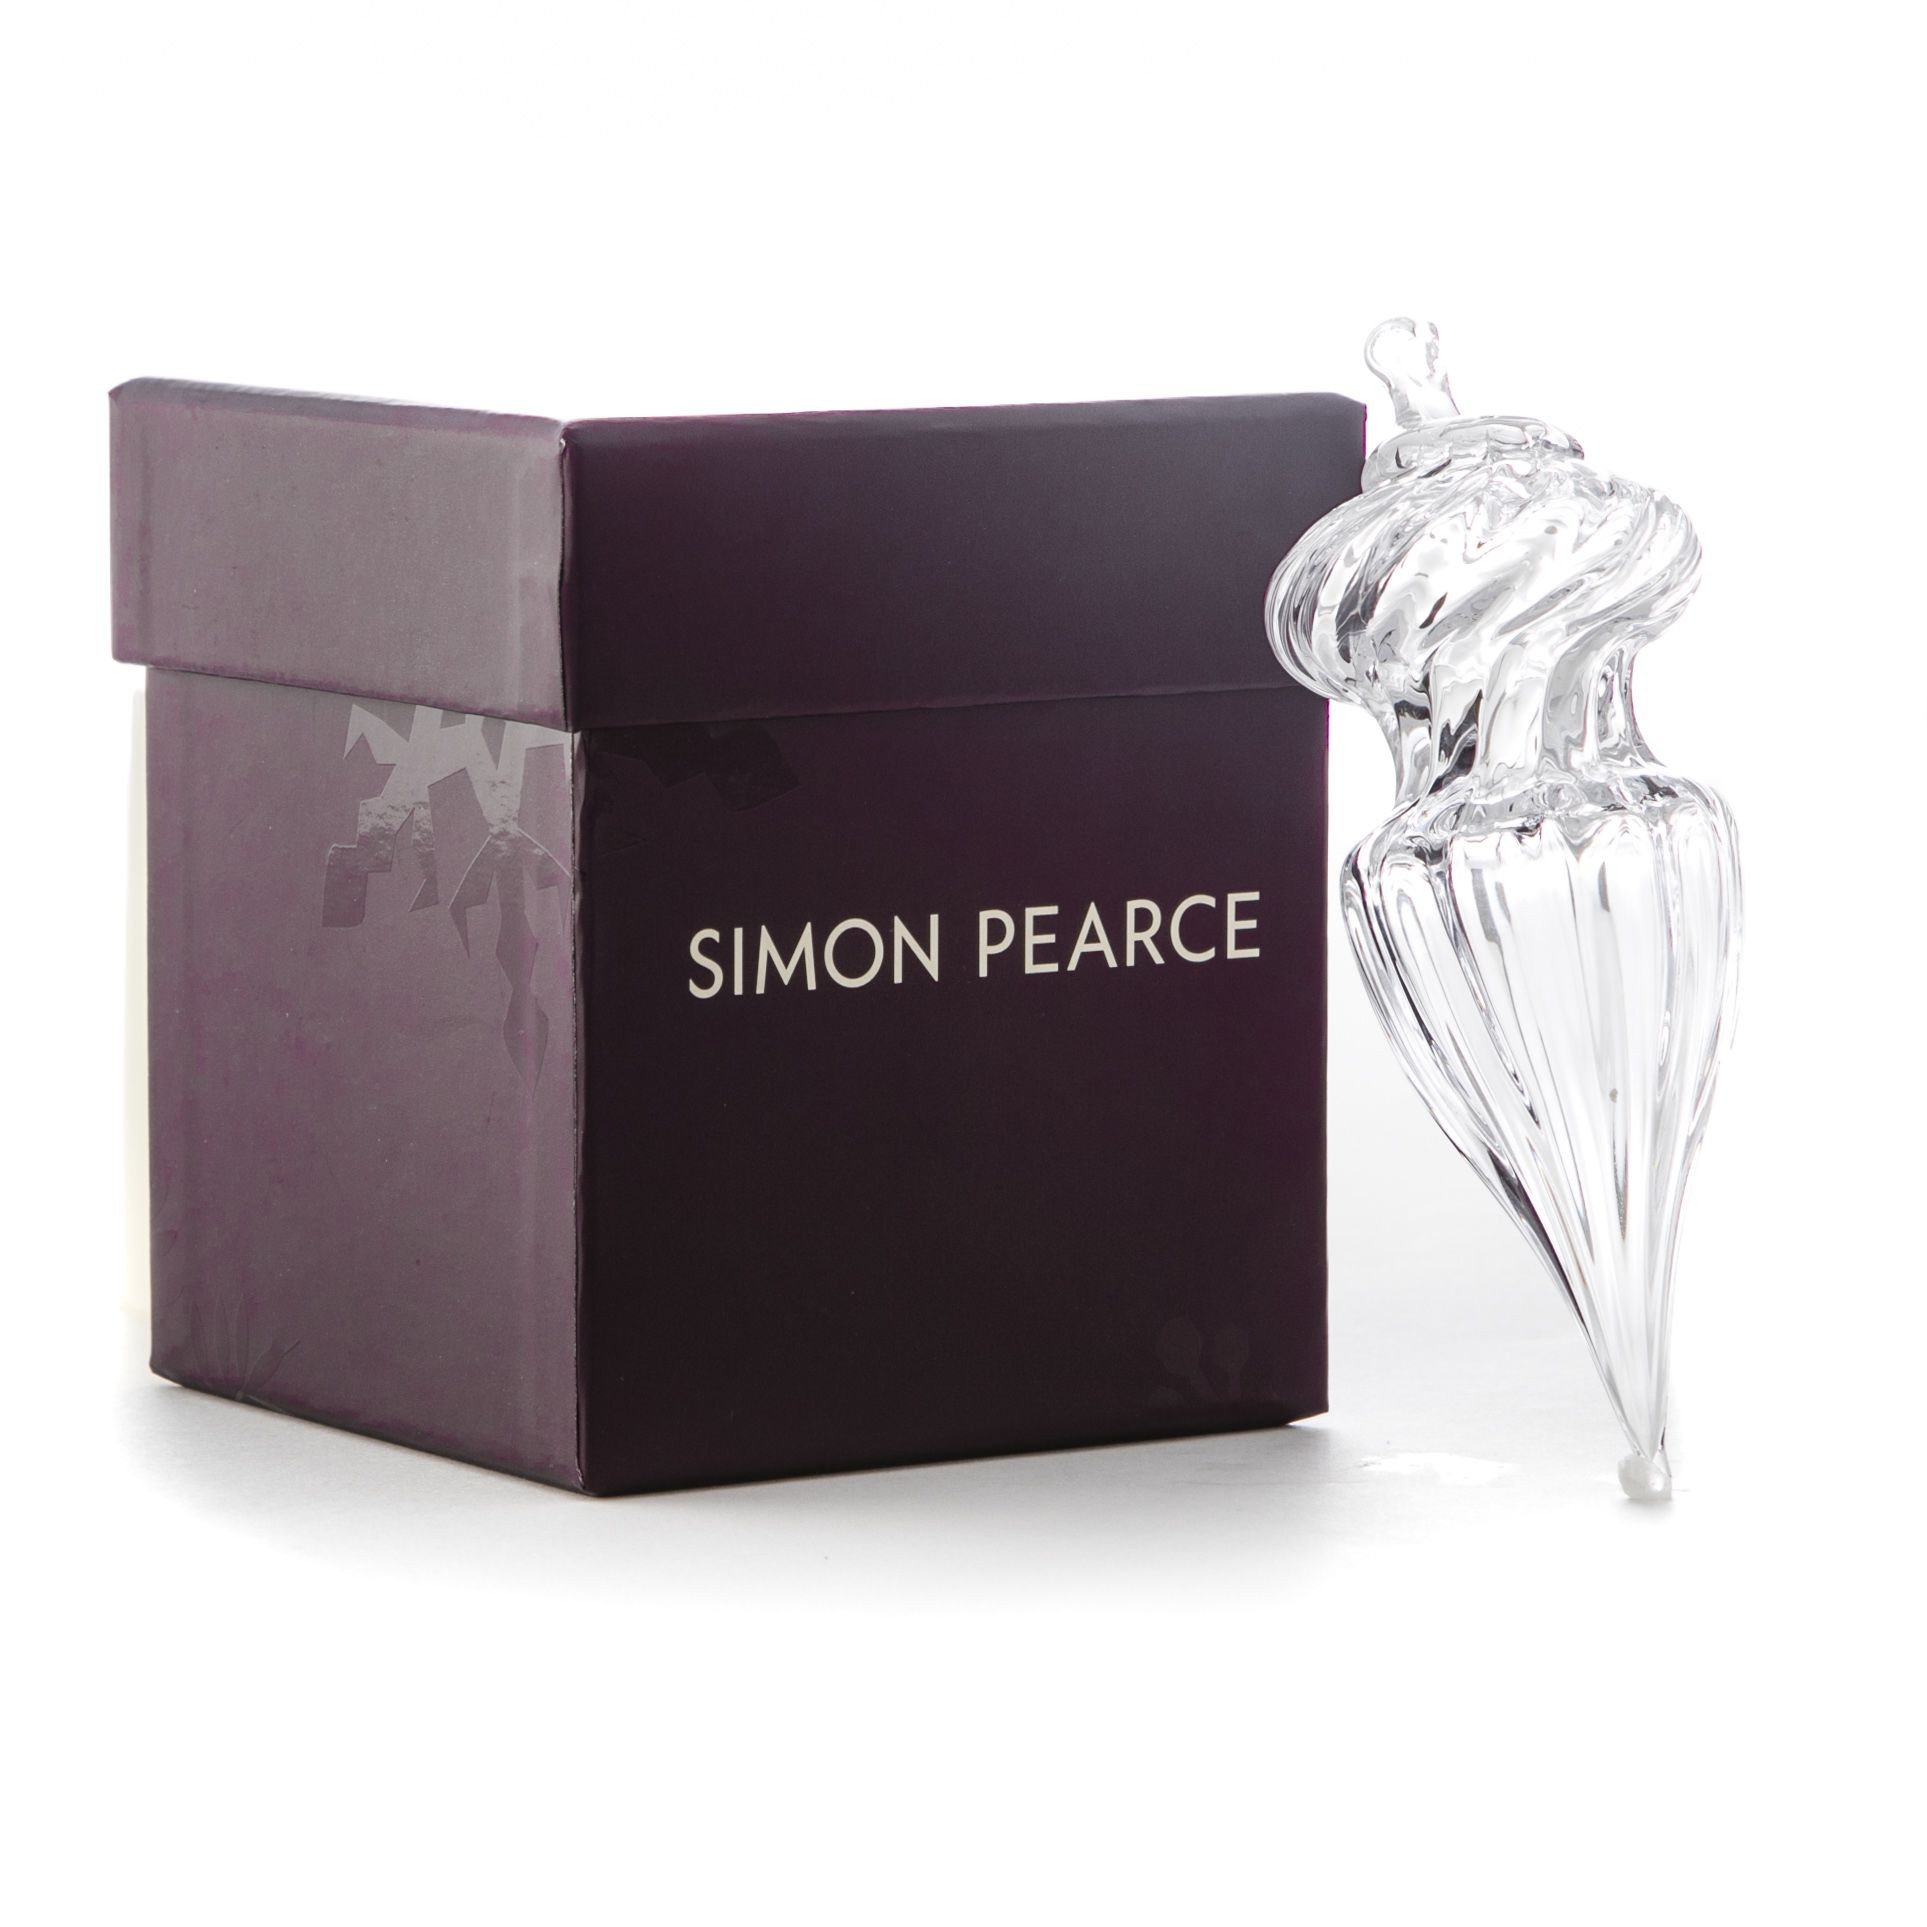 Simon Pearce Chelsea Optic Drop Ornament In A Gift Box